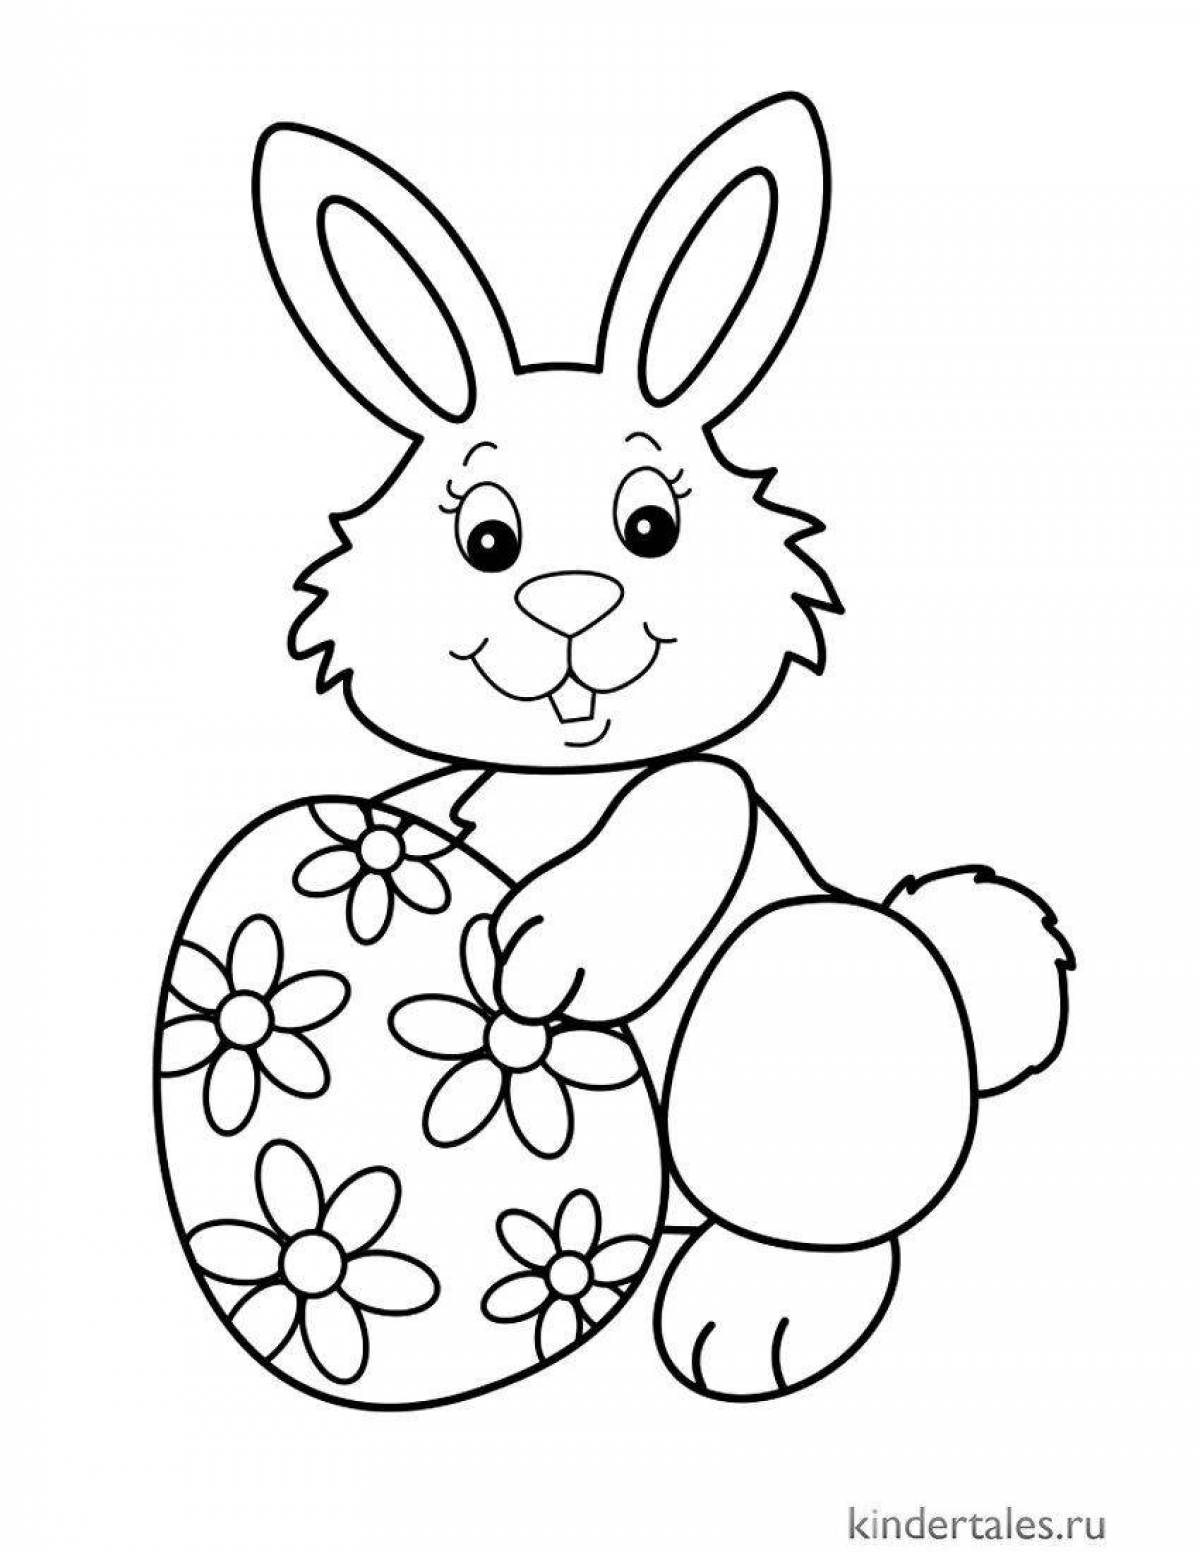 Изысканная раскраска зайца для детей 6-7 лет